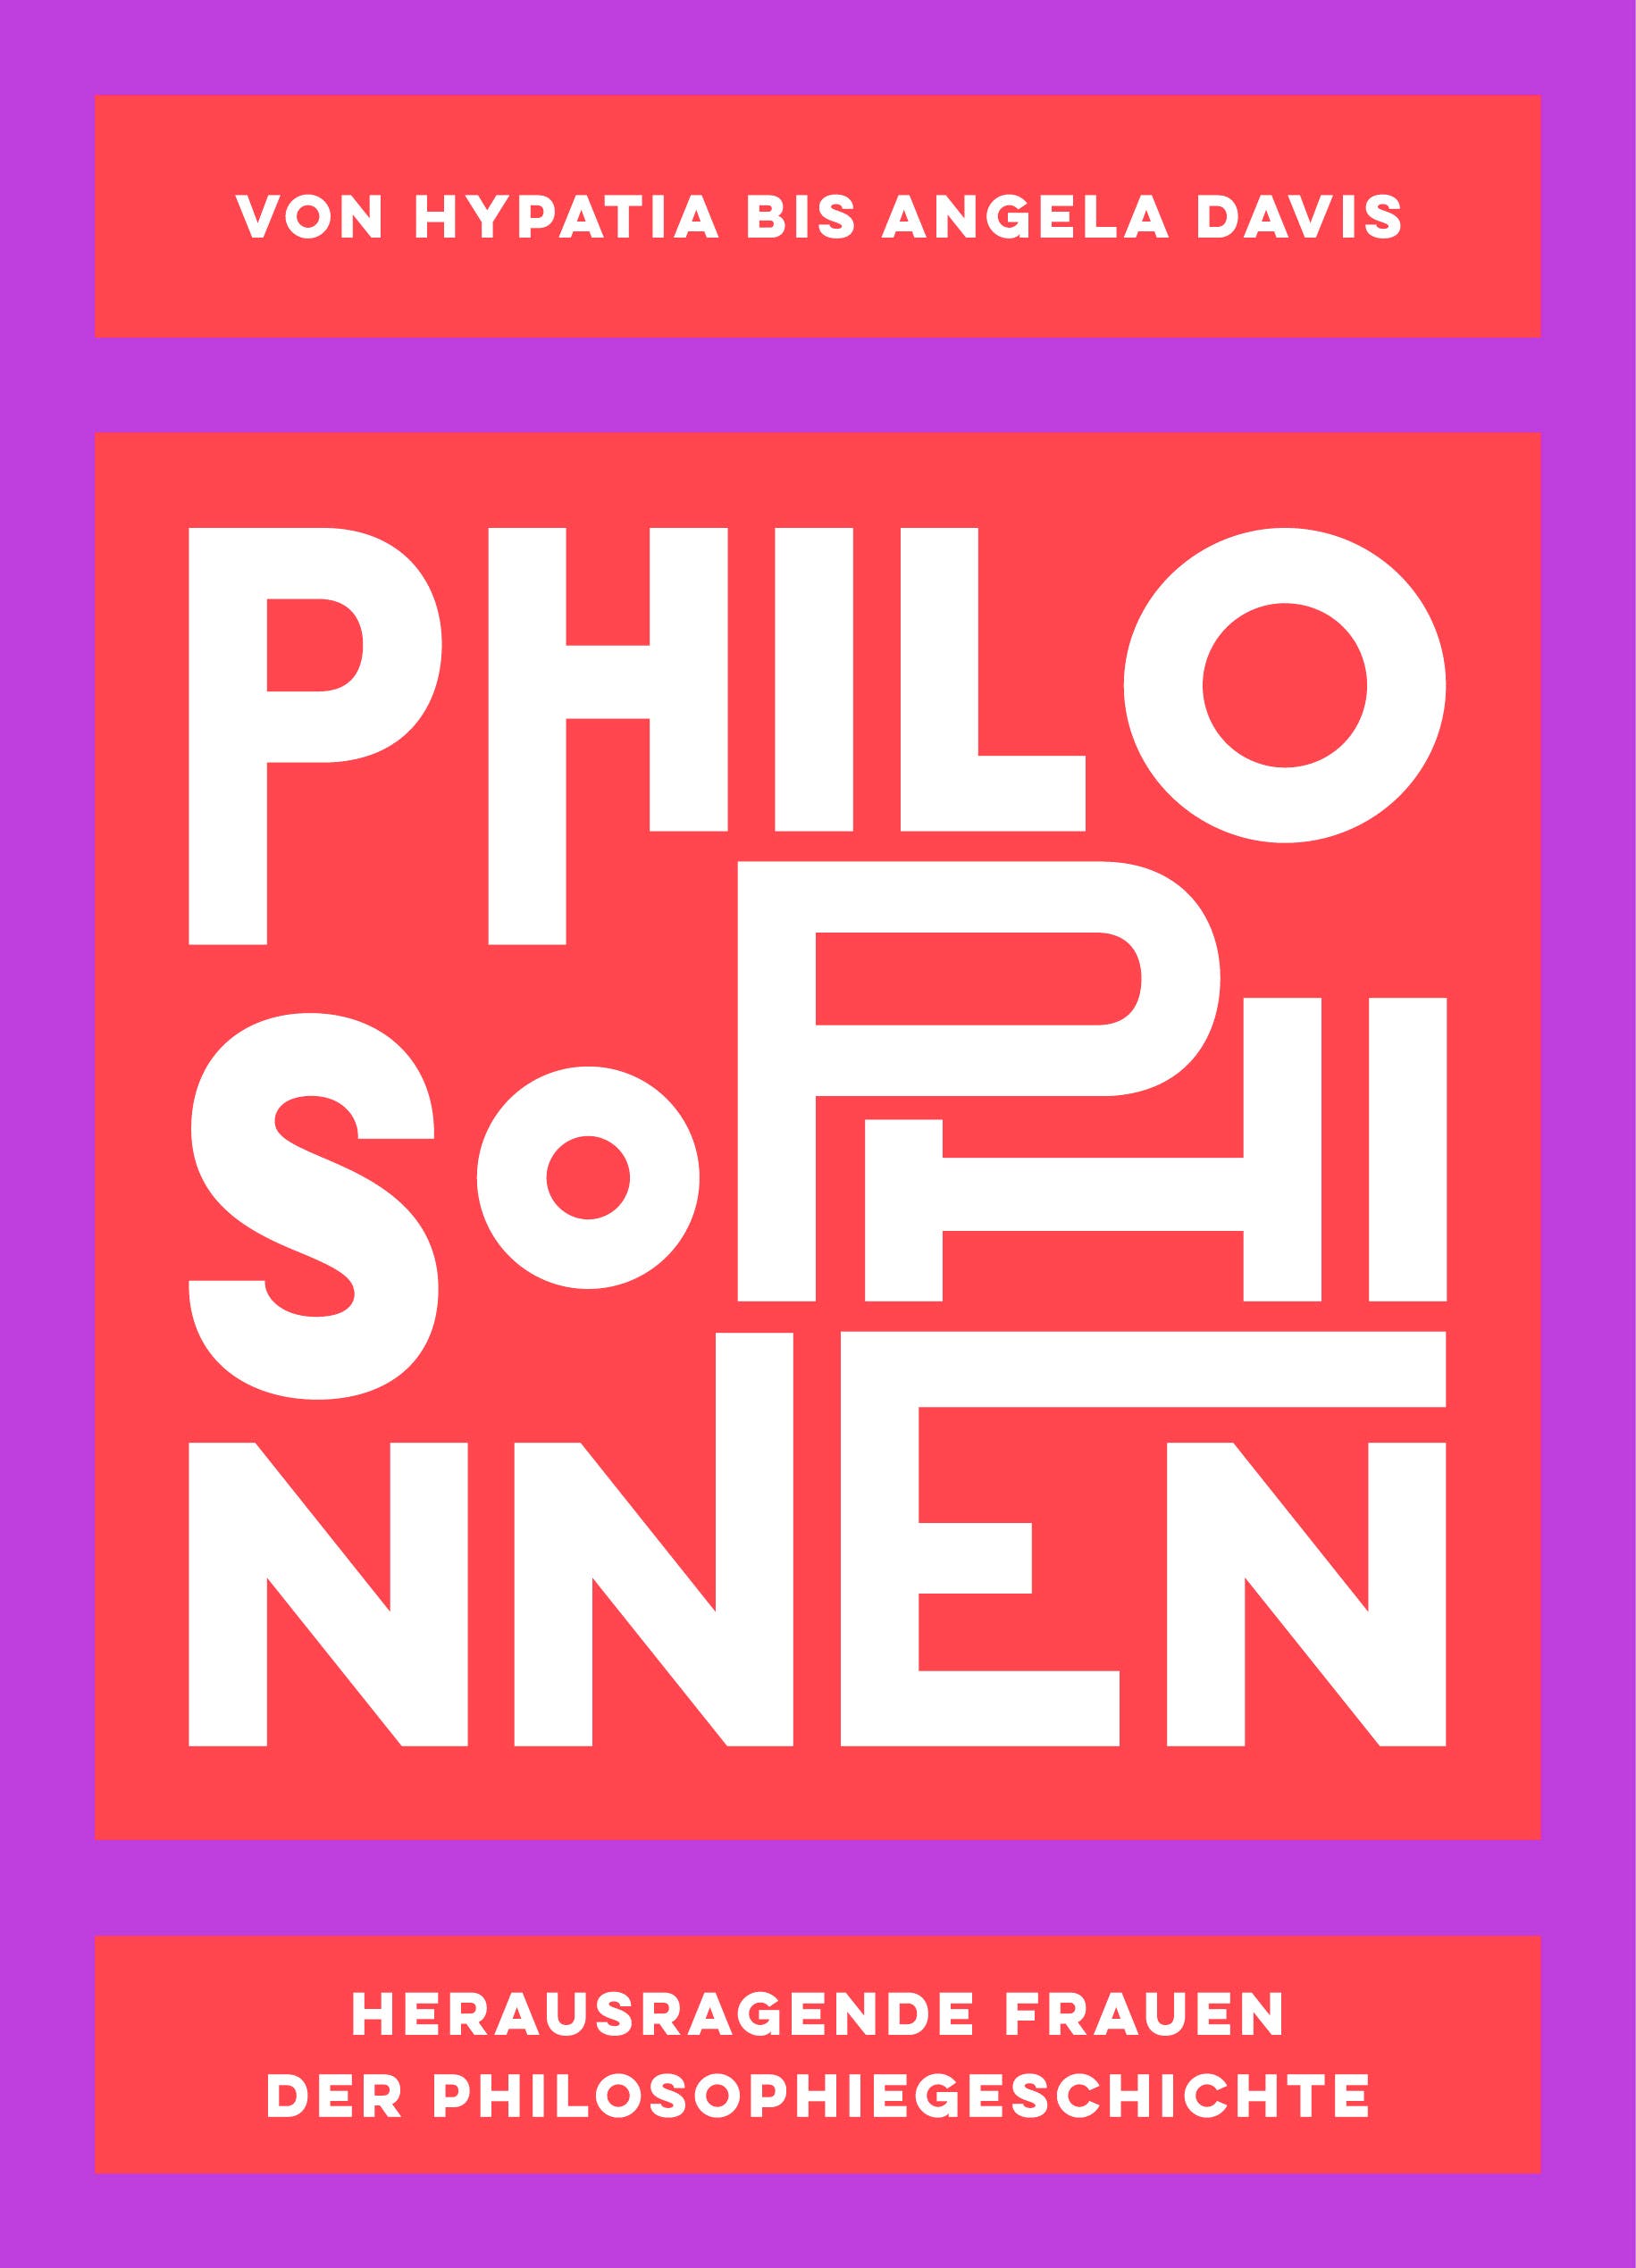 Book review on “Women Philosophers” – Spectrum of Science